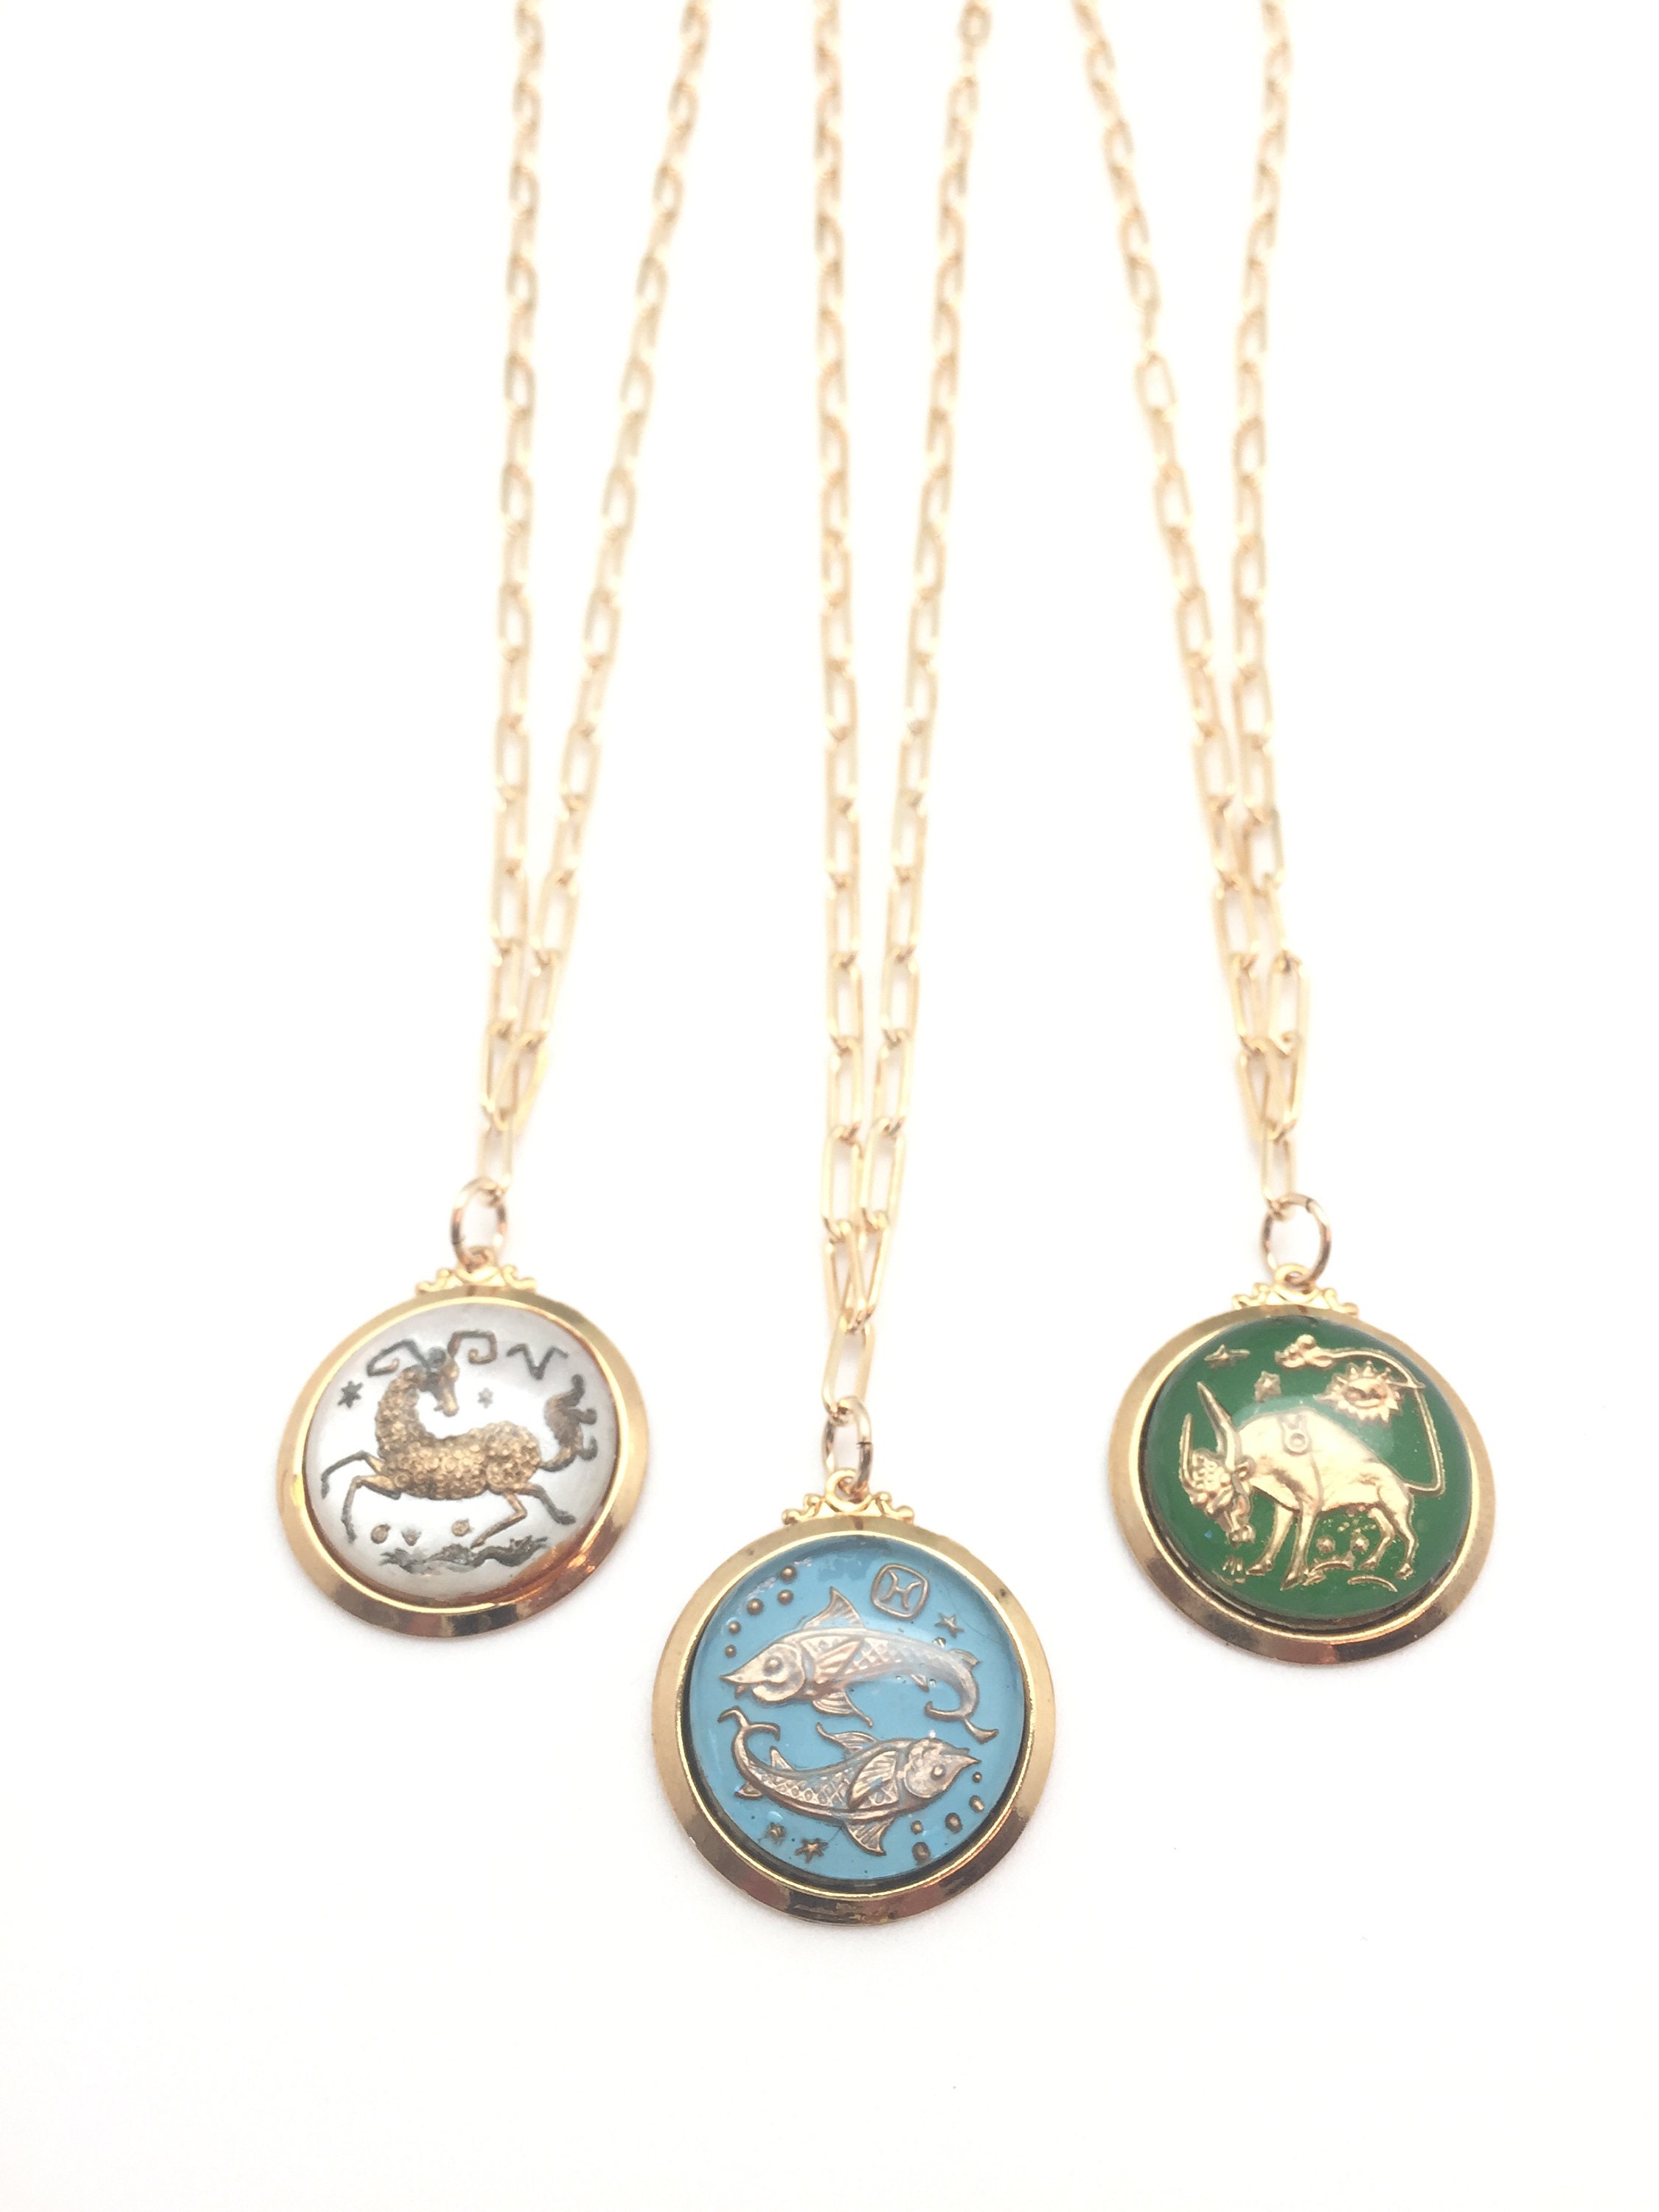 Vintage zodiac necklace vintage astrological sign horoscope | Etsy